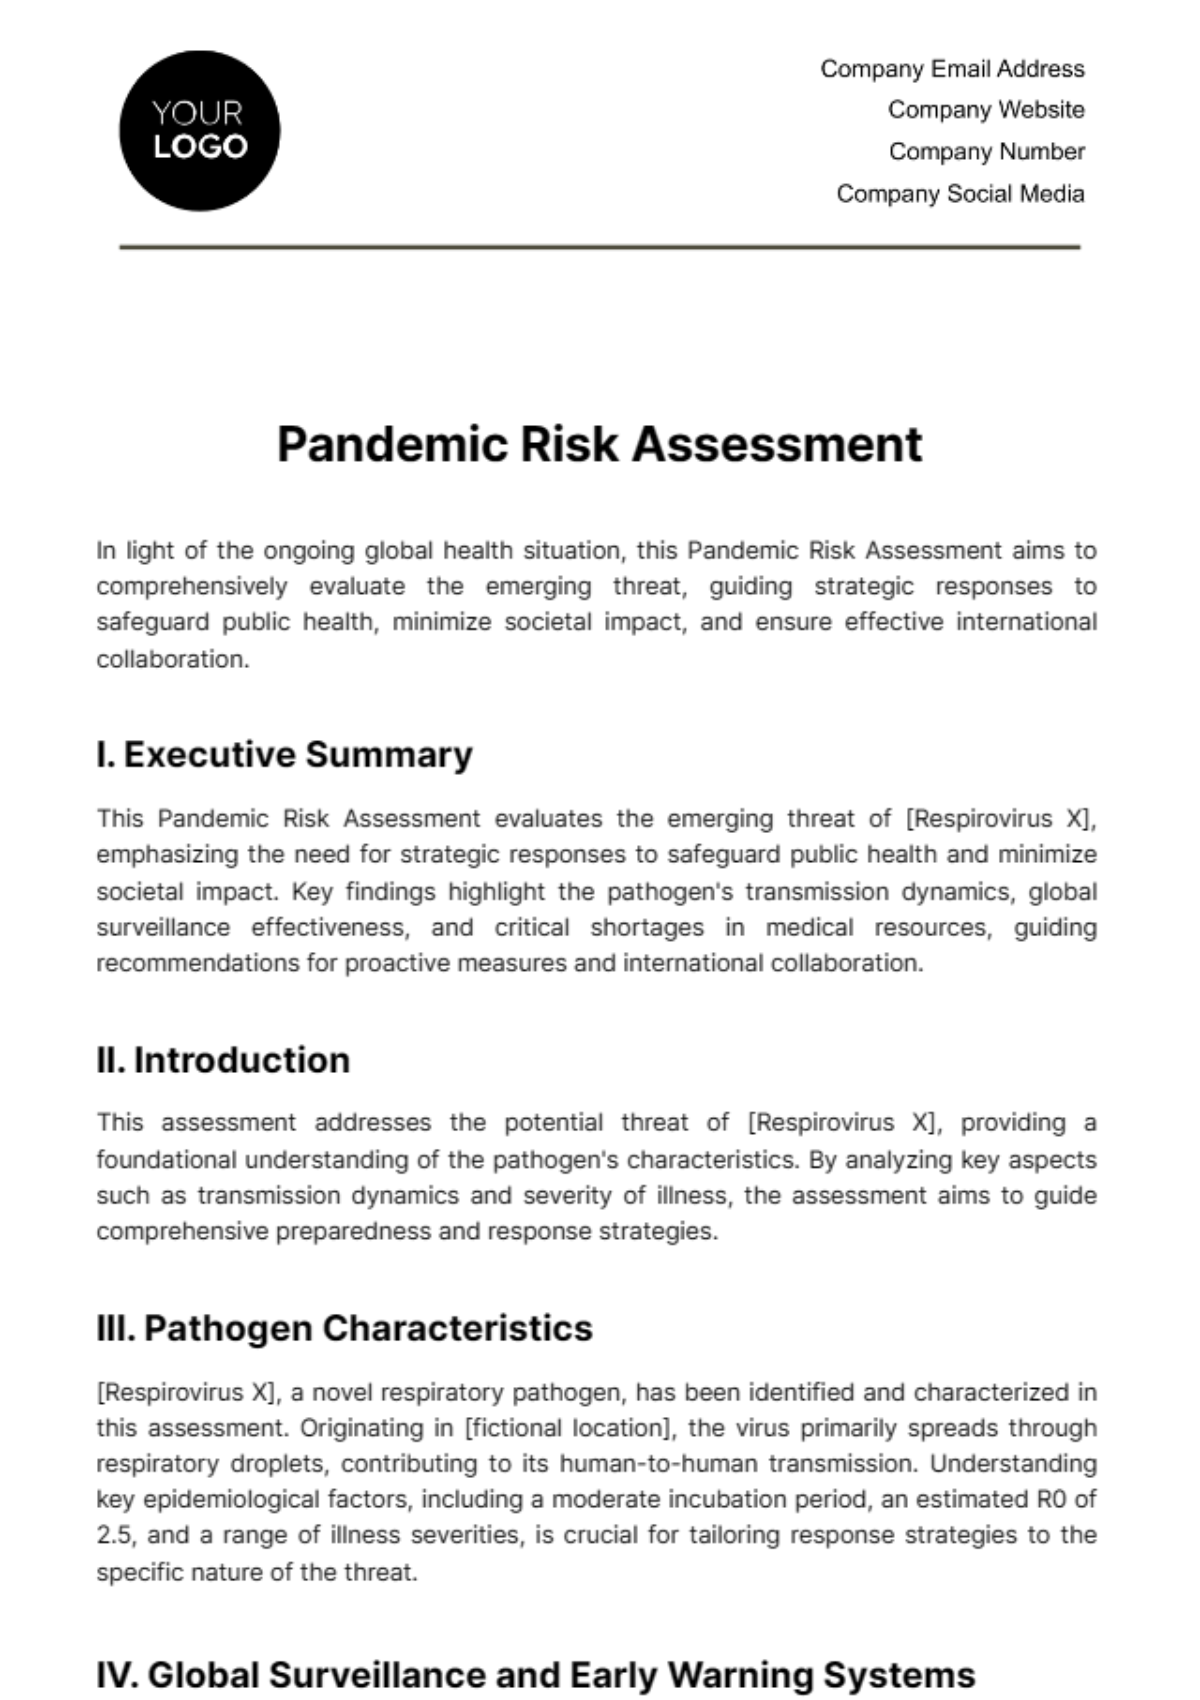 Pandemic Risk Assessment Template